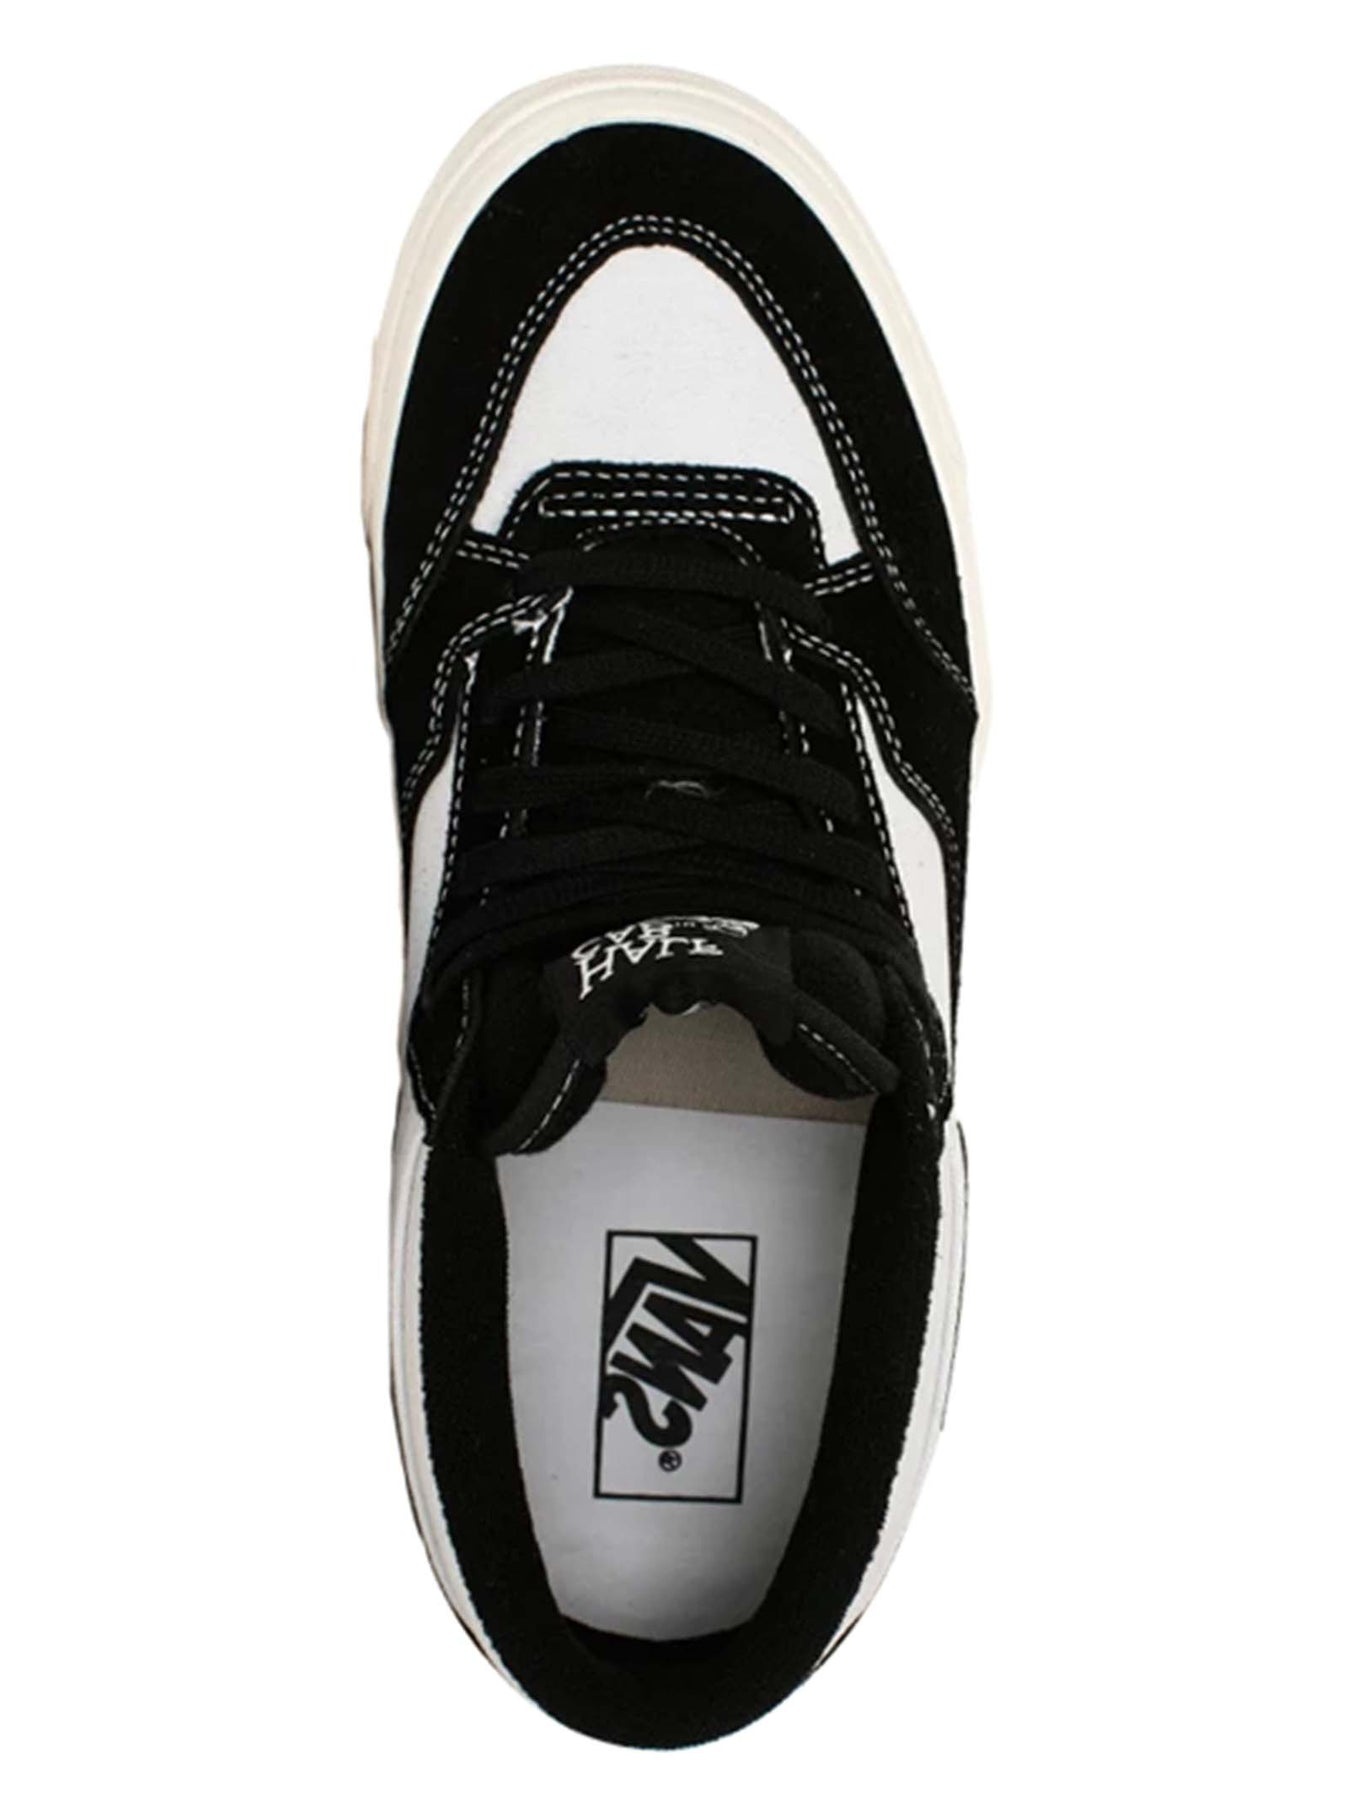 Half Cab 33 Dx Sneakers White/Black - 3